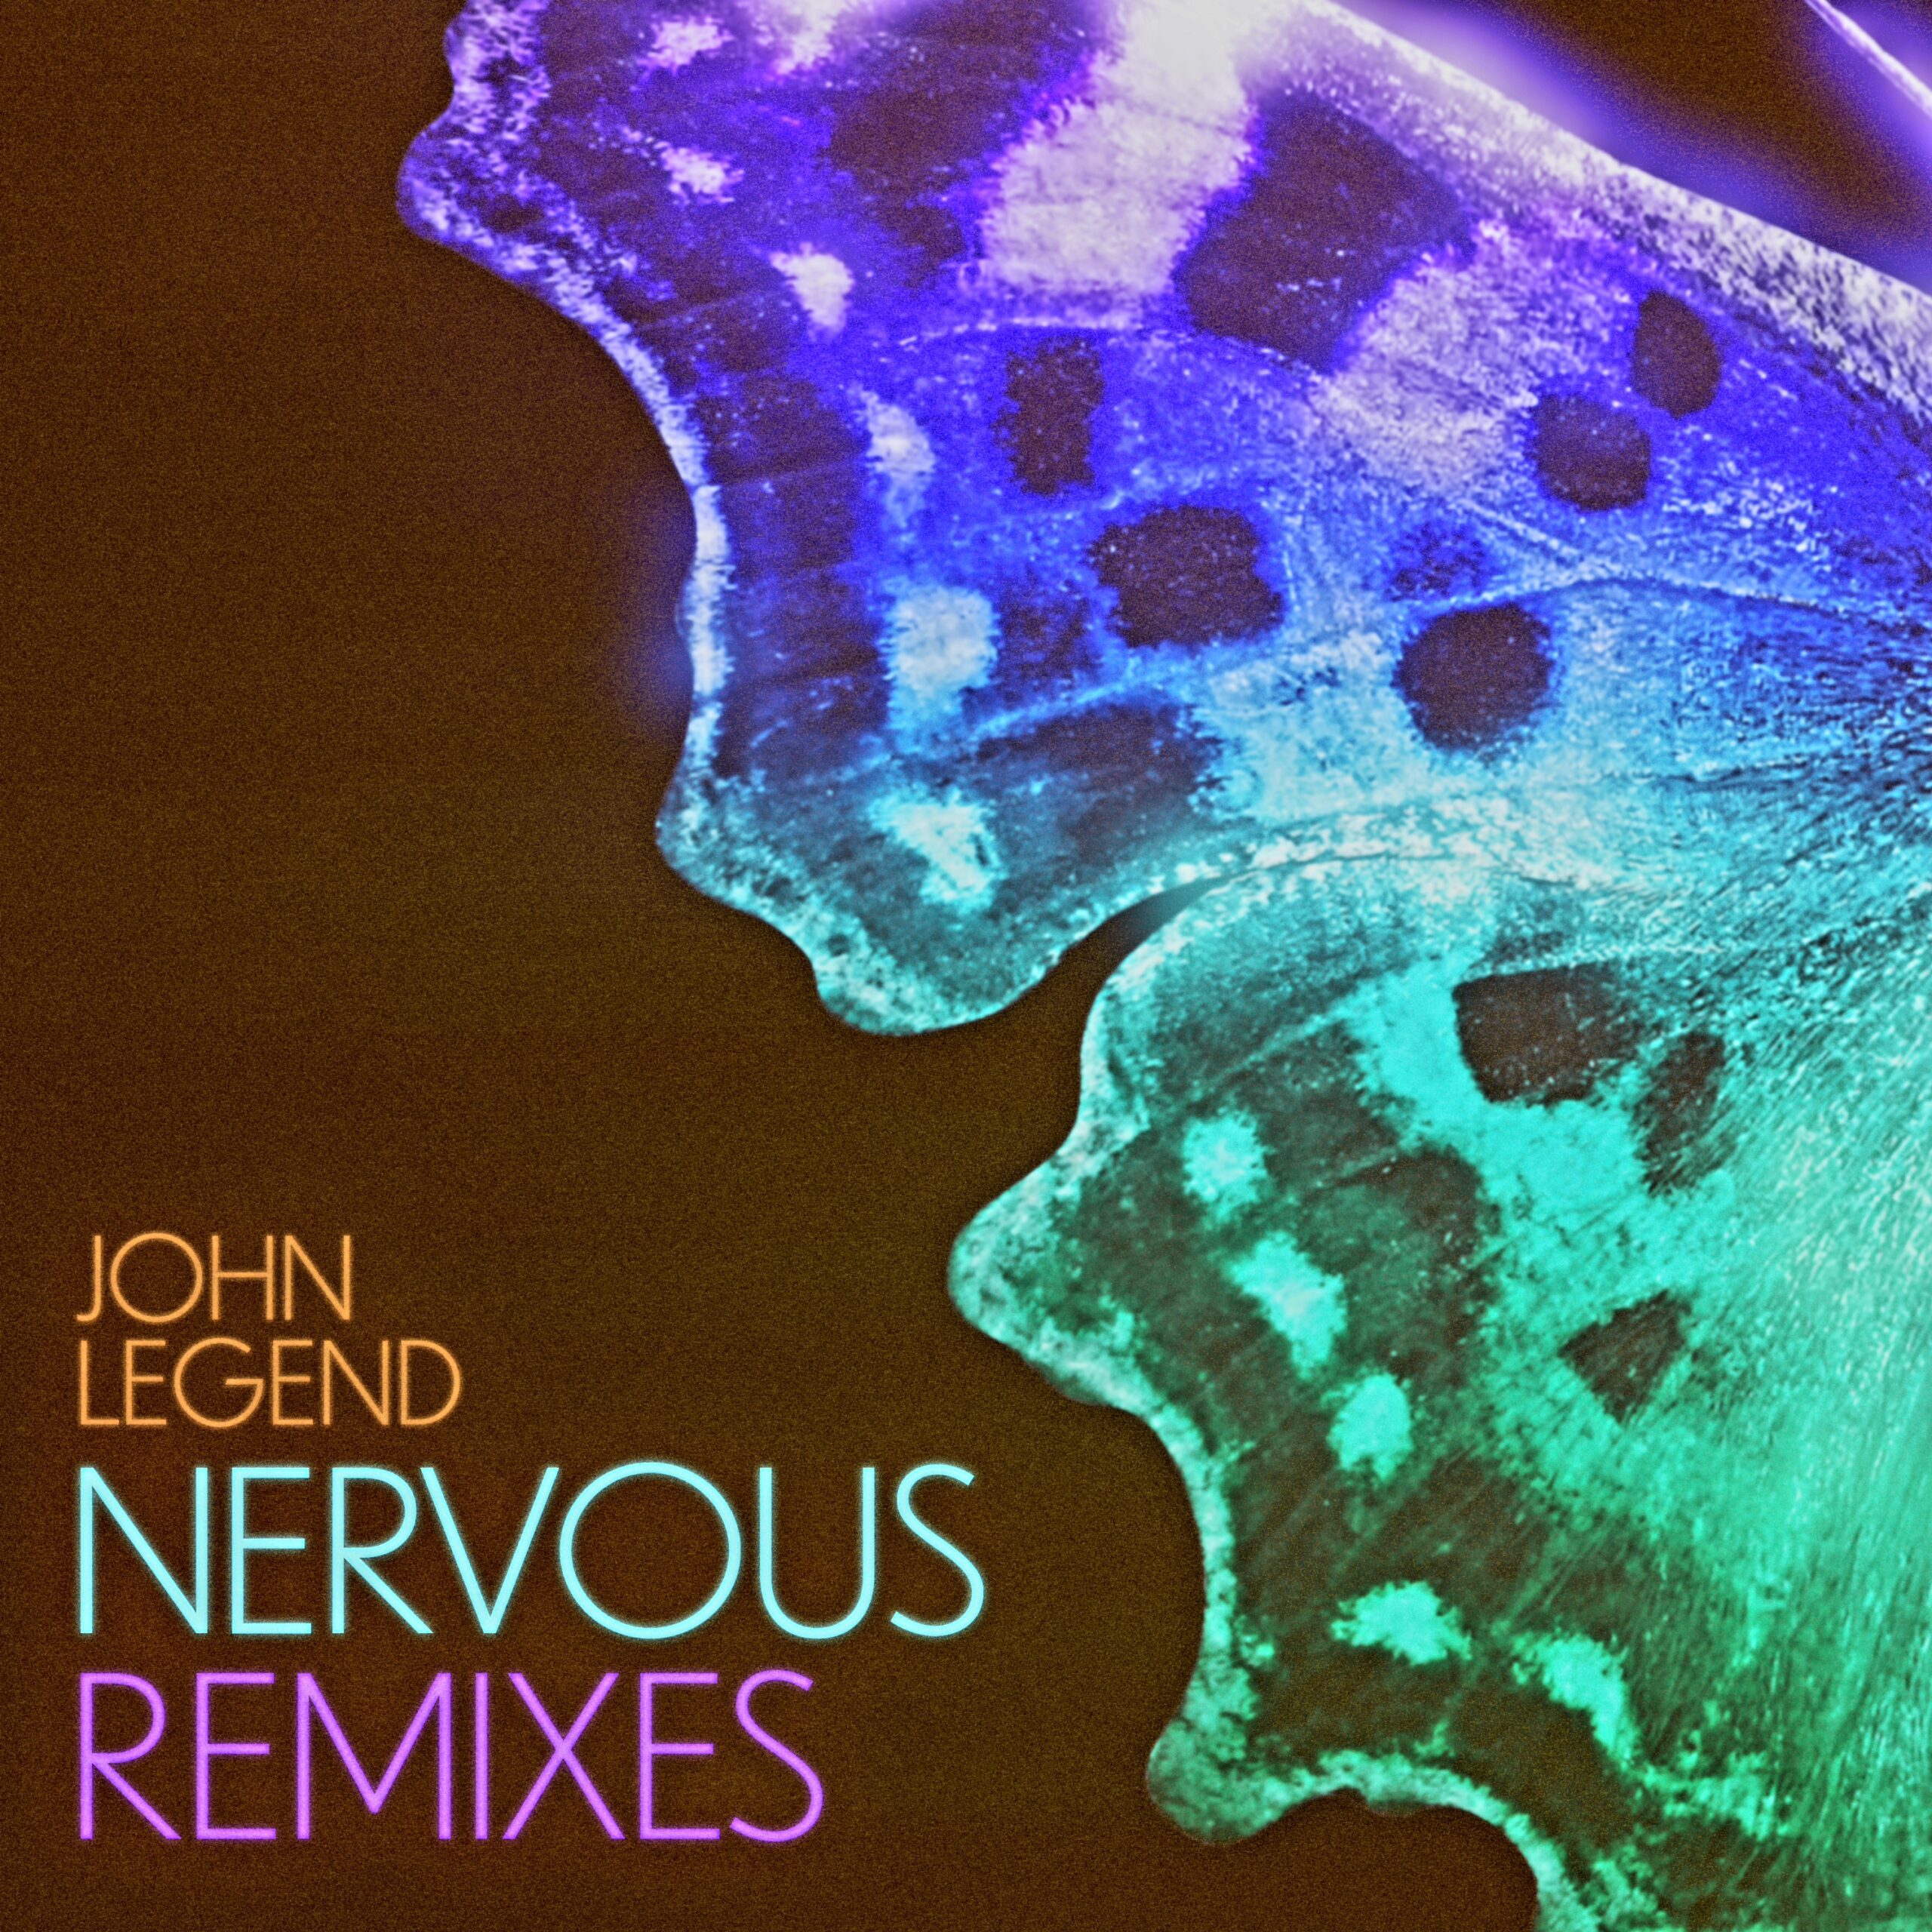 John Legend Nervous Remixes released via 360 MAGAZINE.